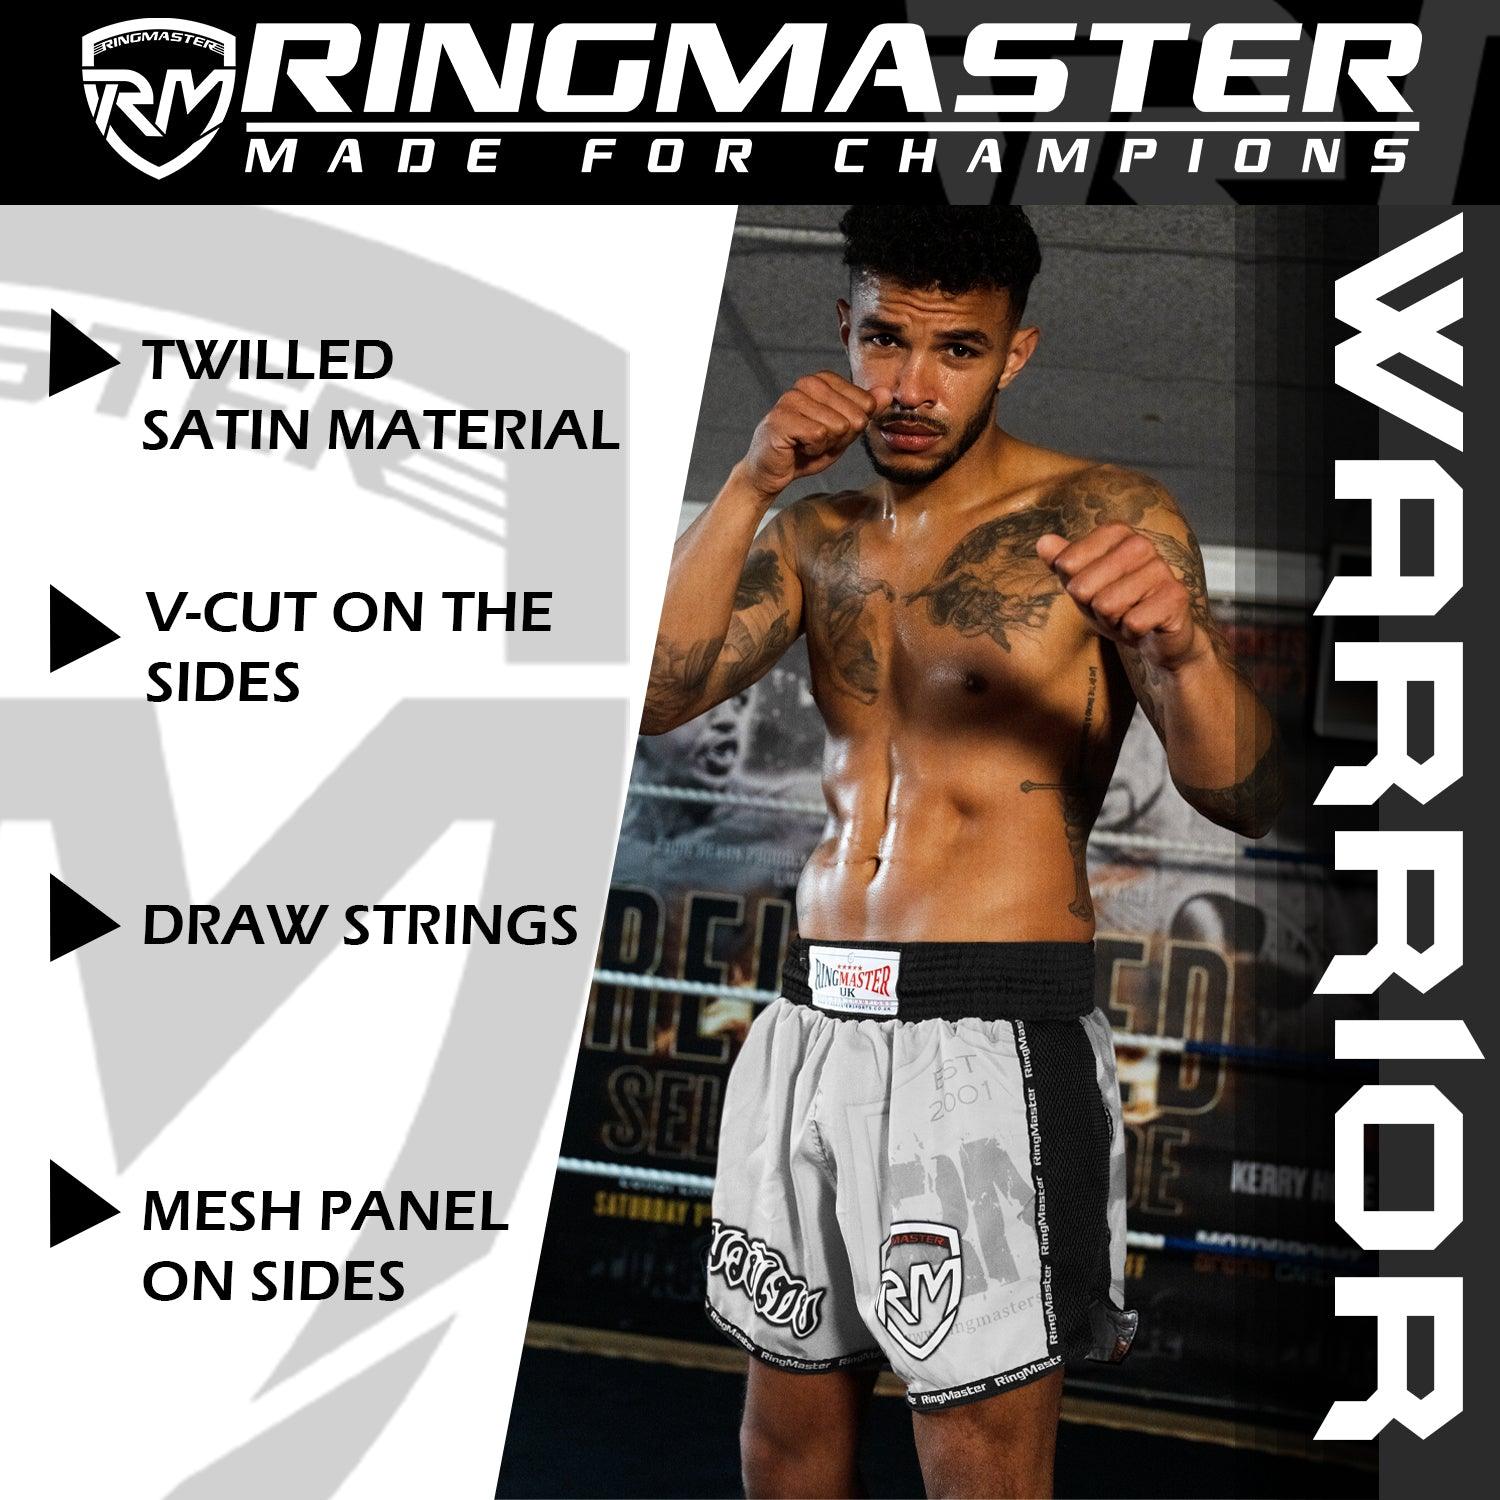 RingMaster Sports Warrior Kids Thai / Kickboxing Shorts White - RingMaster Sports